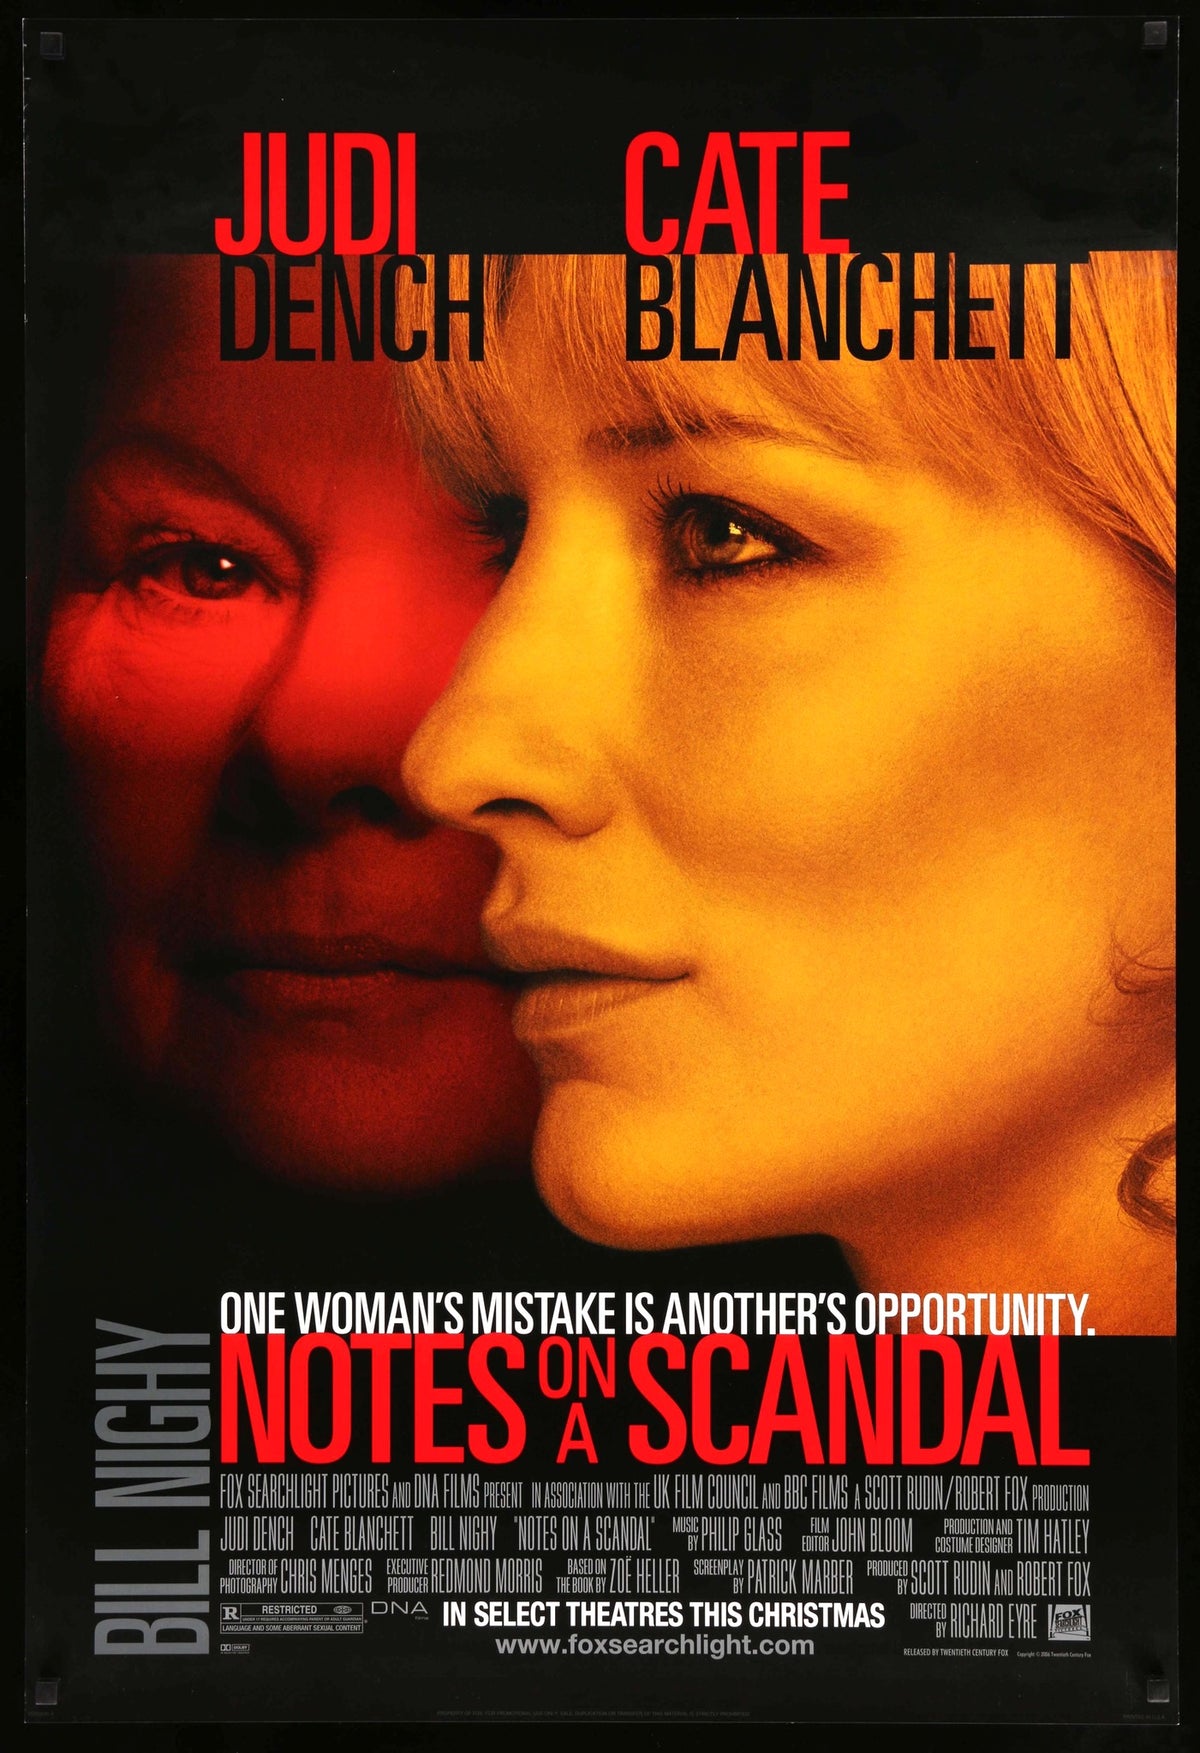 Notes on a Scandal (2006) original movie poster for sale at Original Film Art